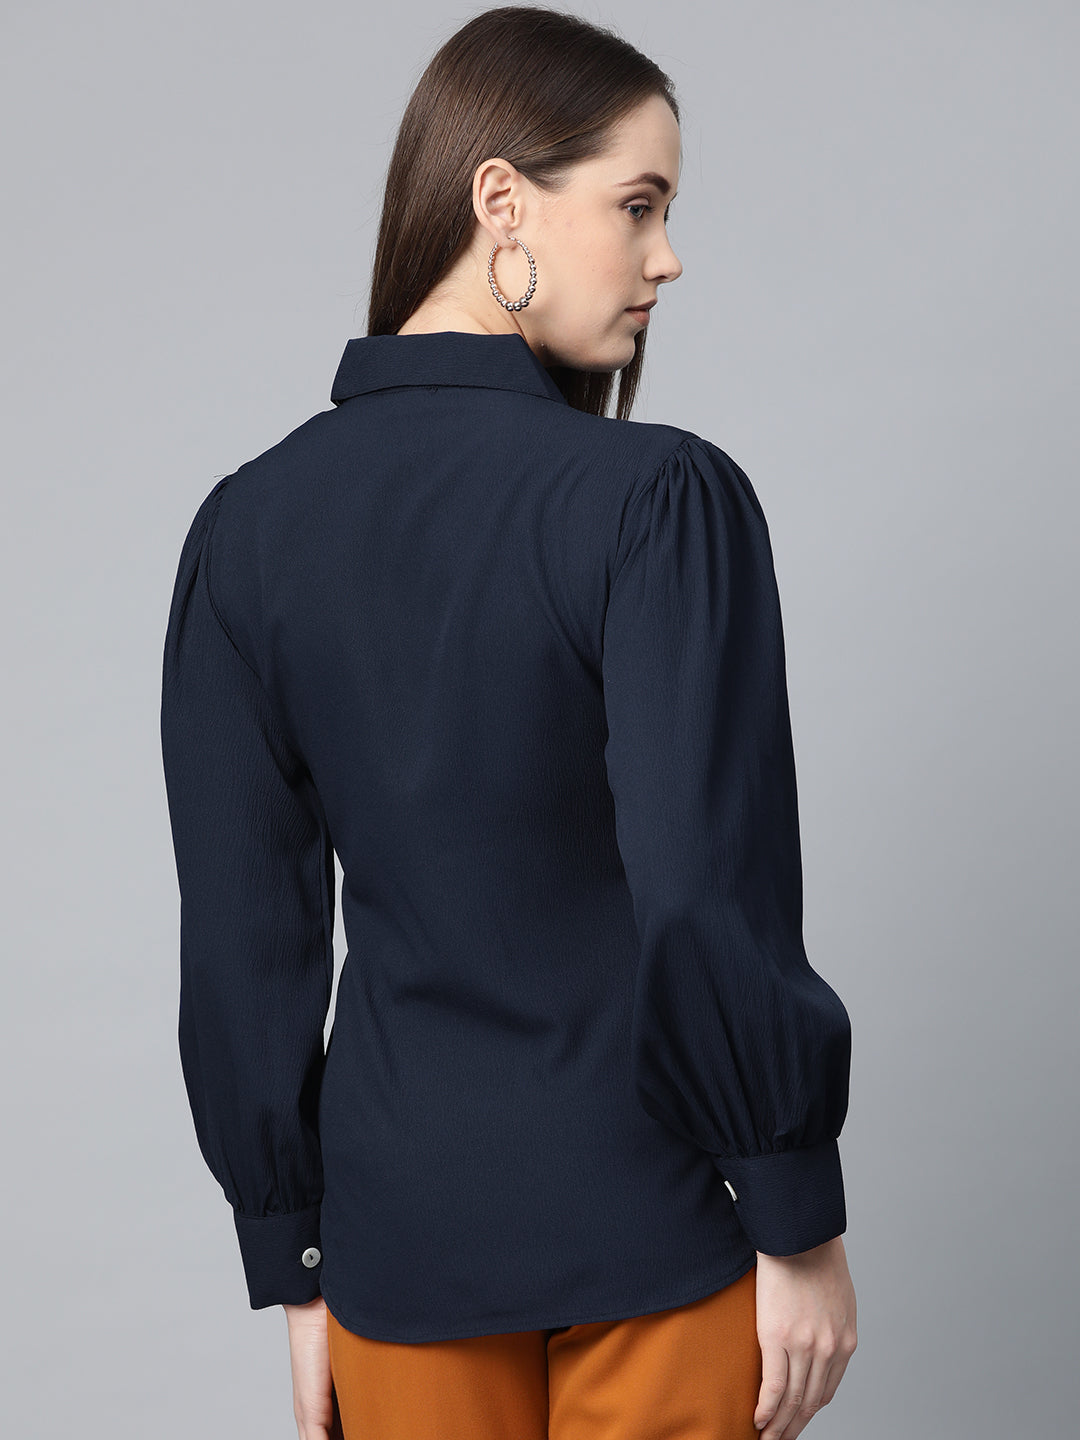 Jompers Women Navy Blue Regular Fit Crinkled Effect Casual Shirt